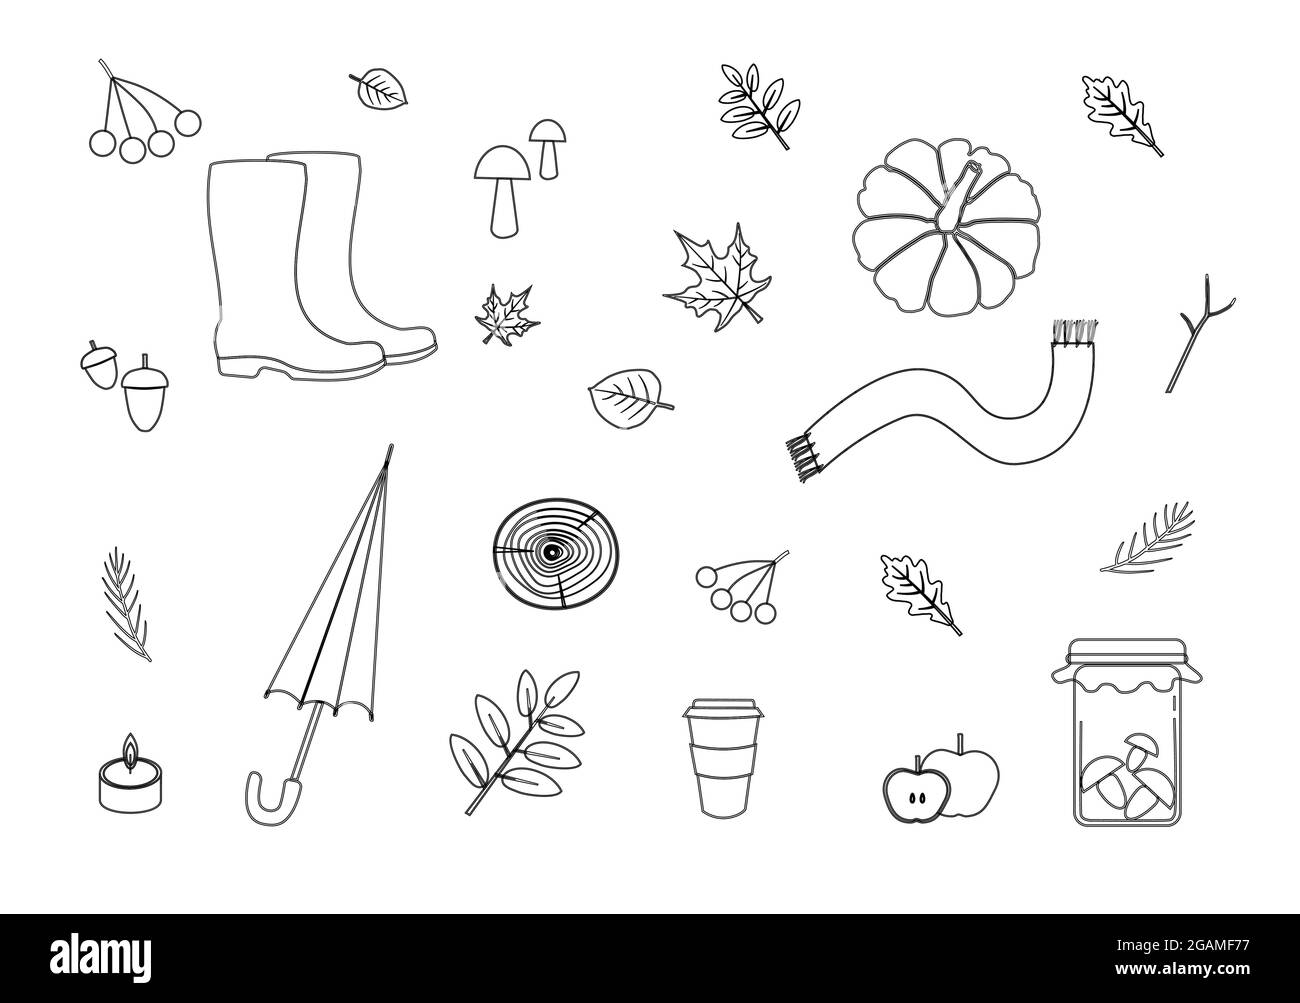 Autumn season doodles elements set isolated on white background Stock Vector